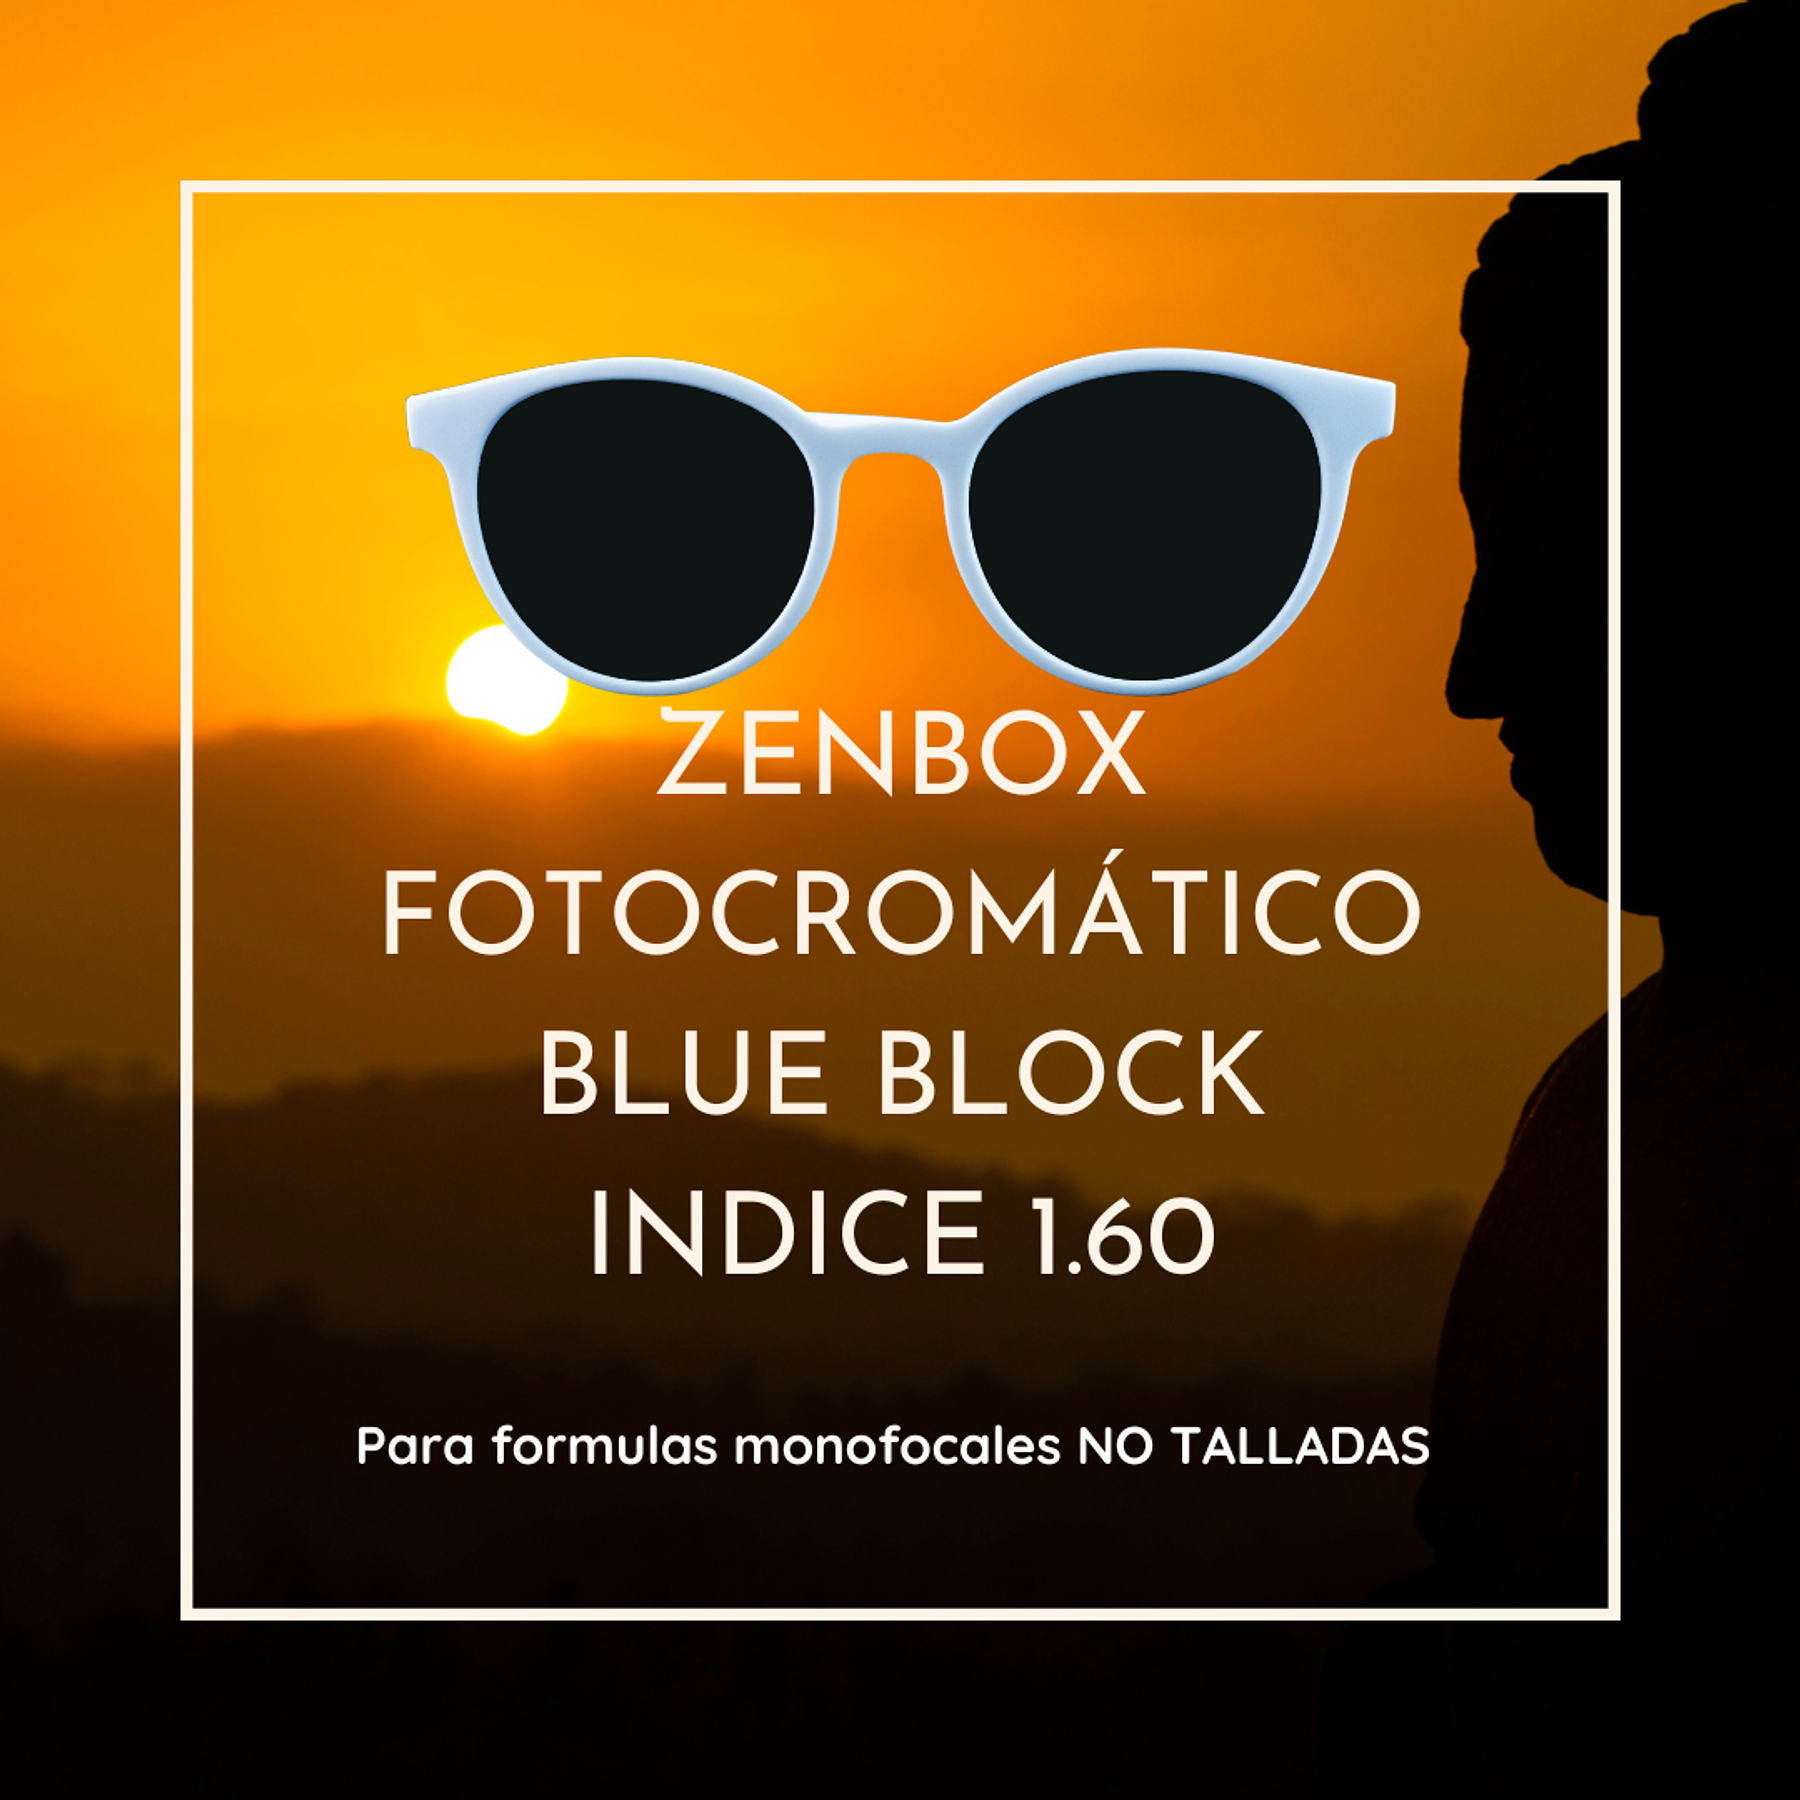 ZENBOX Alto indice 1.60 Blue Balance Fotocromatico